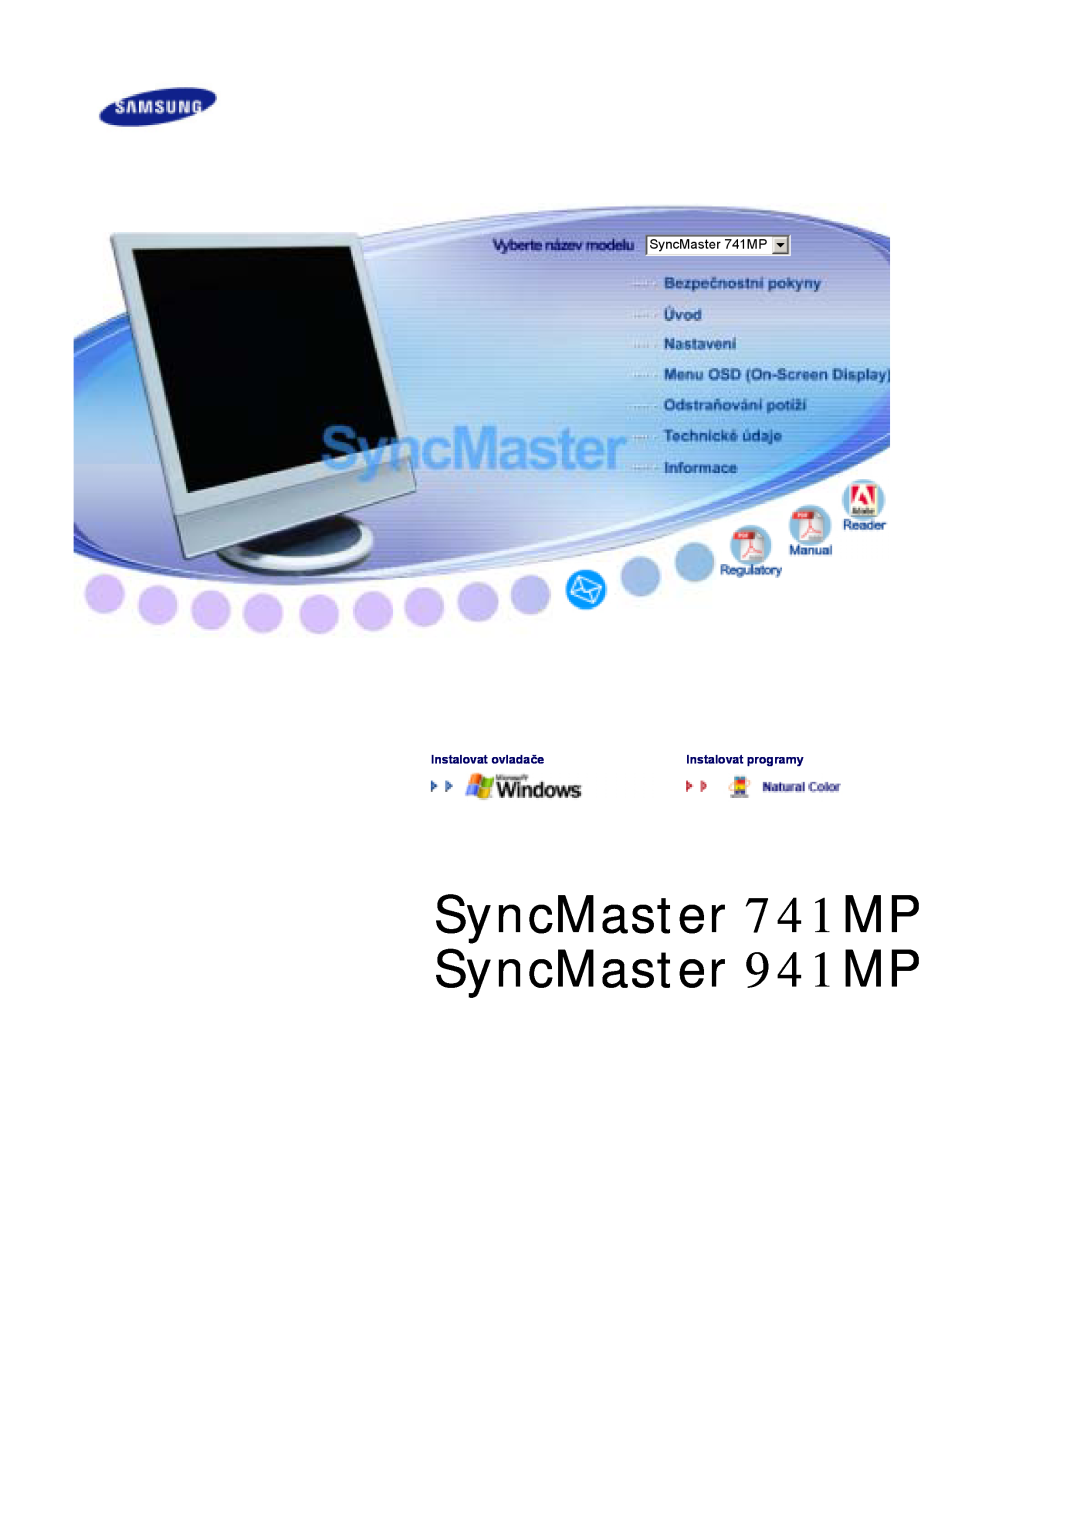 Samsung LS17DOASS/EDC, LS19DOASS/EDC manual 㫖㩷GGSyncMaster 741MP㫖 SyncMaster 941MP, Instalovat ovladače 